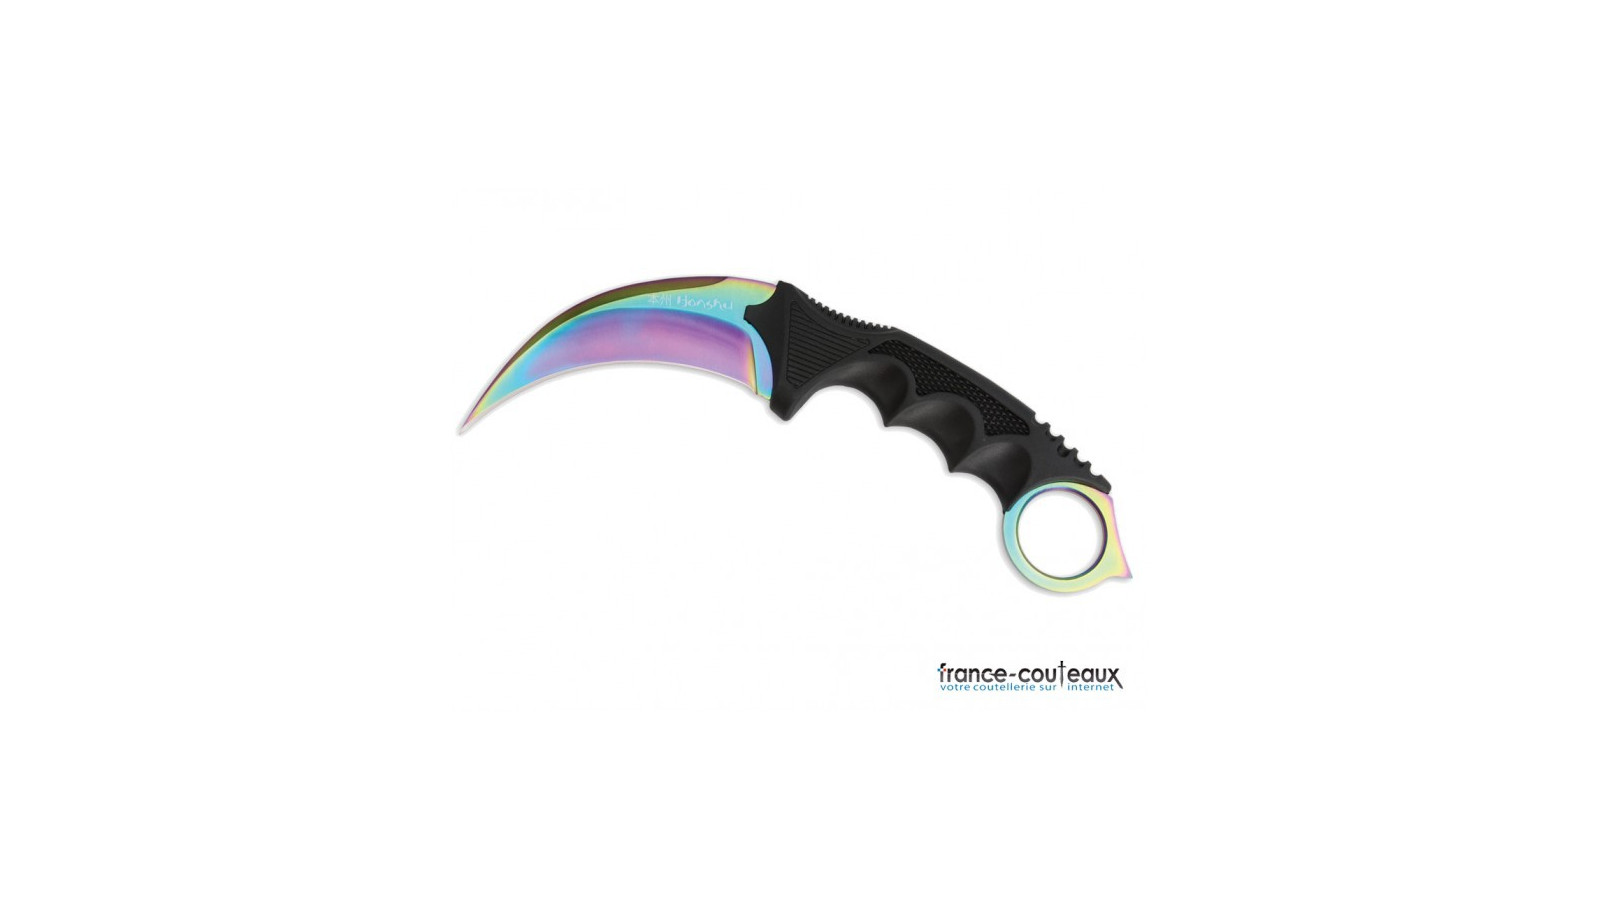 Couteau Karambit Honshu lame rainbow arc en ciel